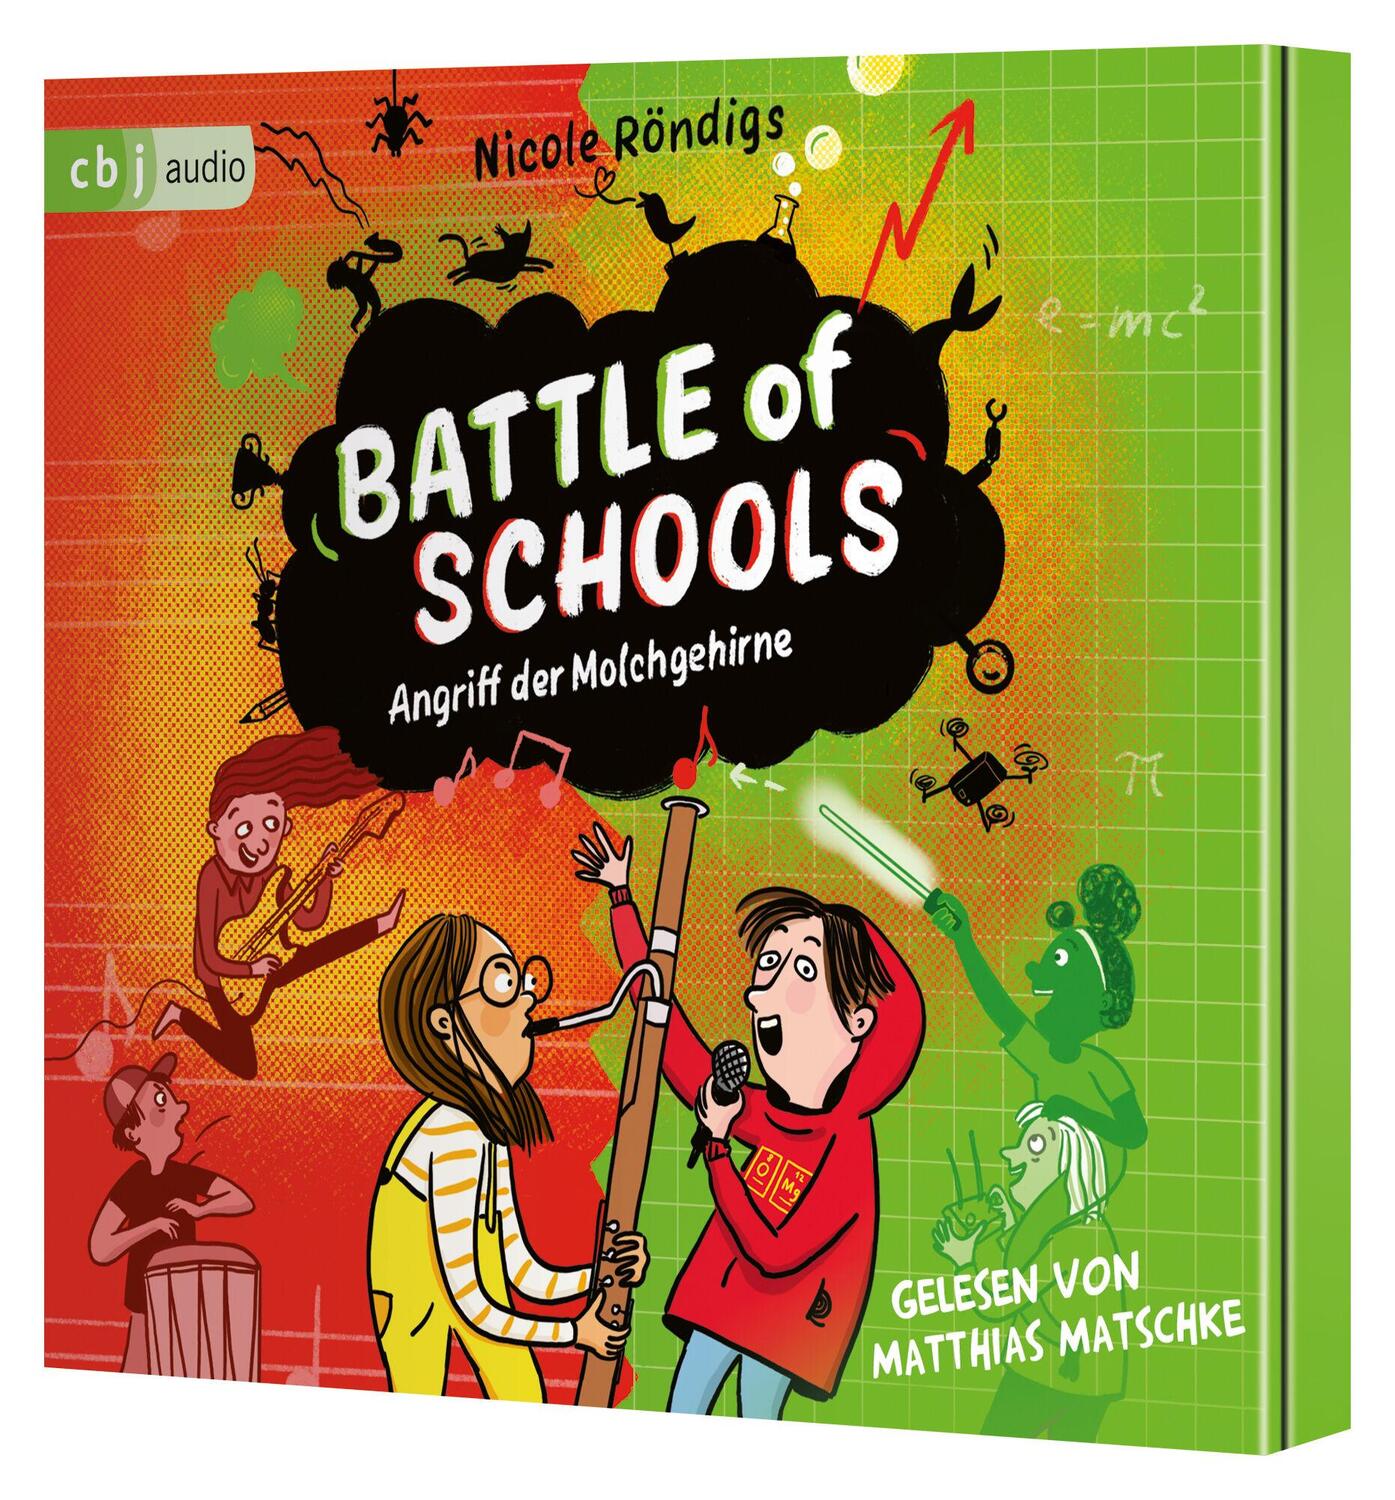 Bild: 9783837165319 | Battle of Schools - Angriff der Molchgehirne | Nicole Röndigs | CD